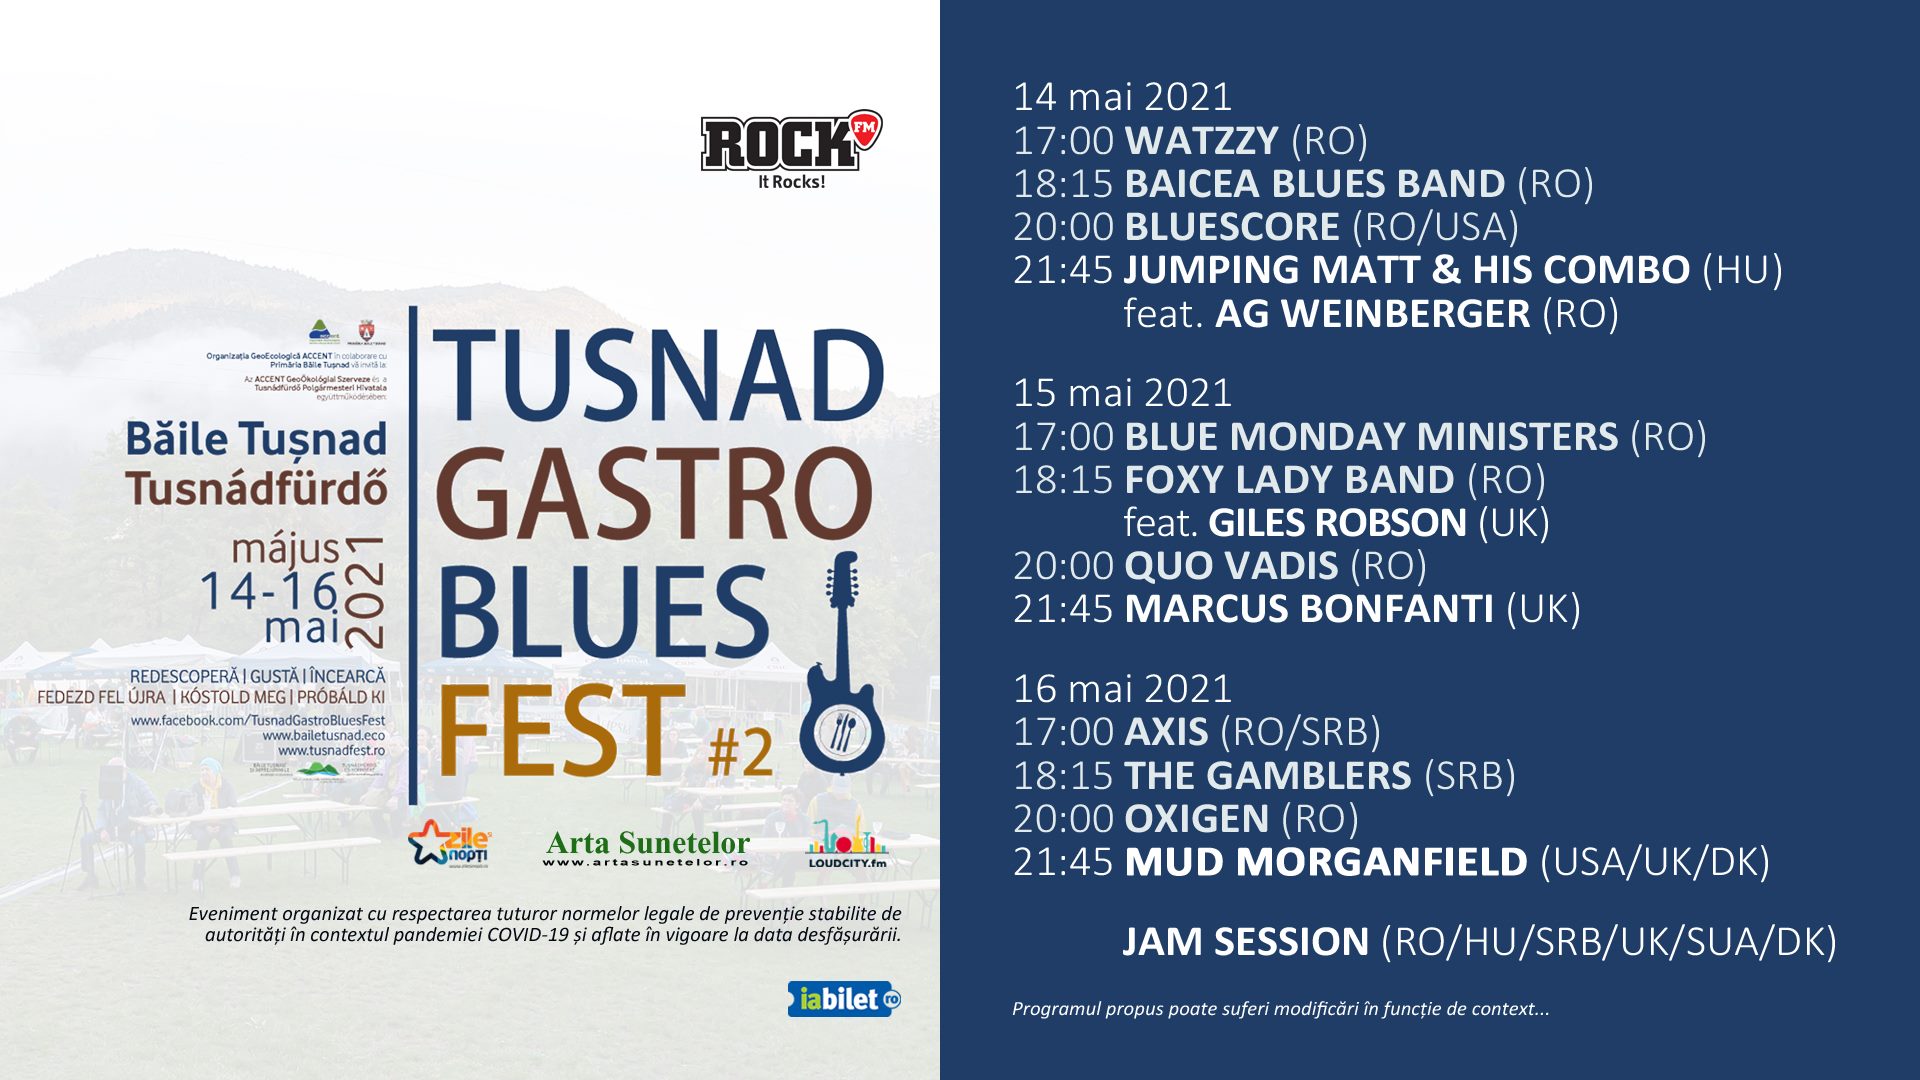 Tusnad Gastro Blues Fest 2021